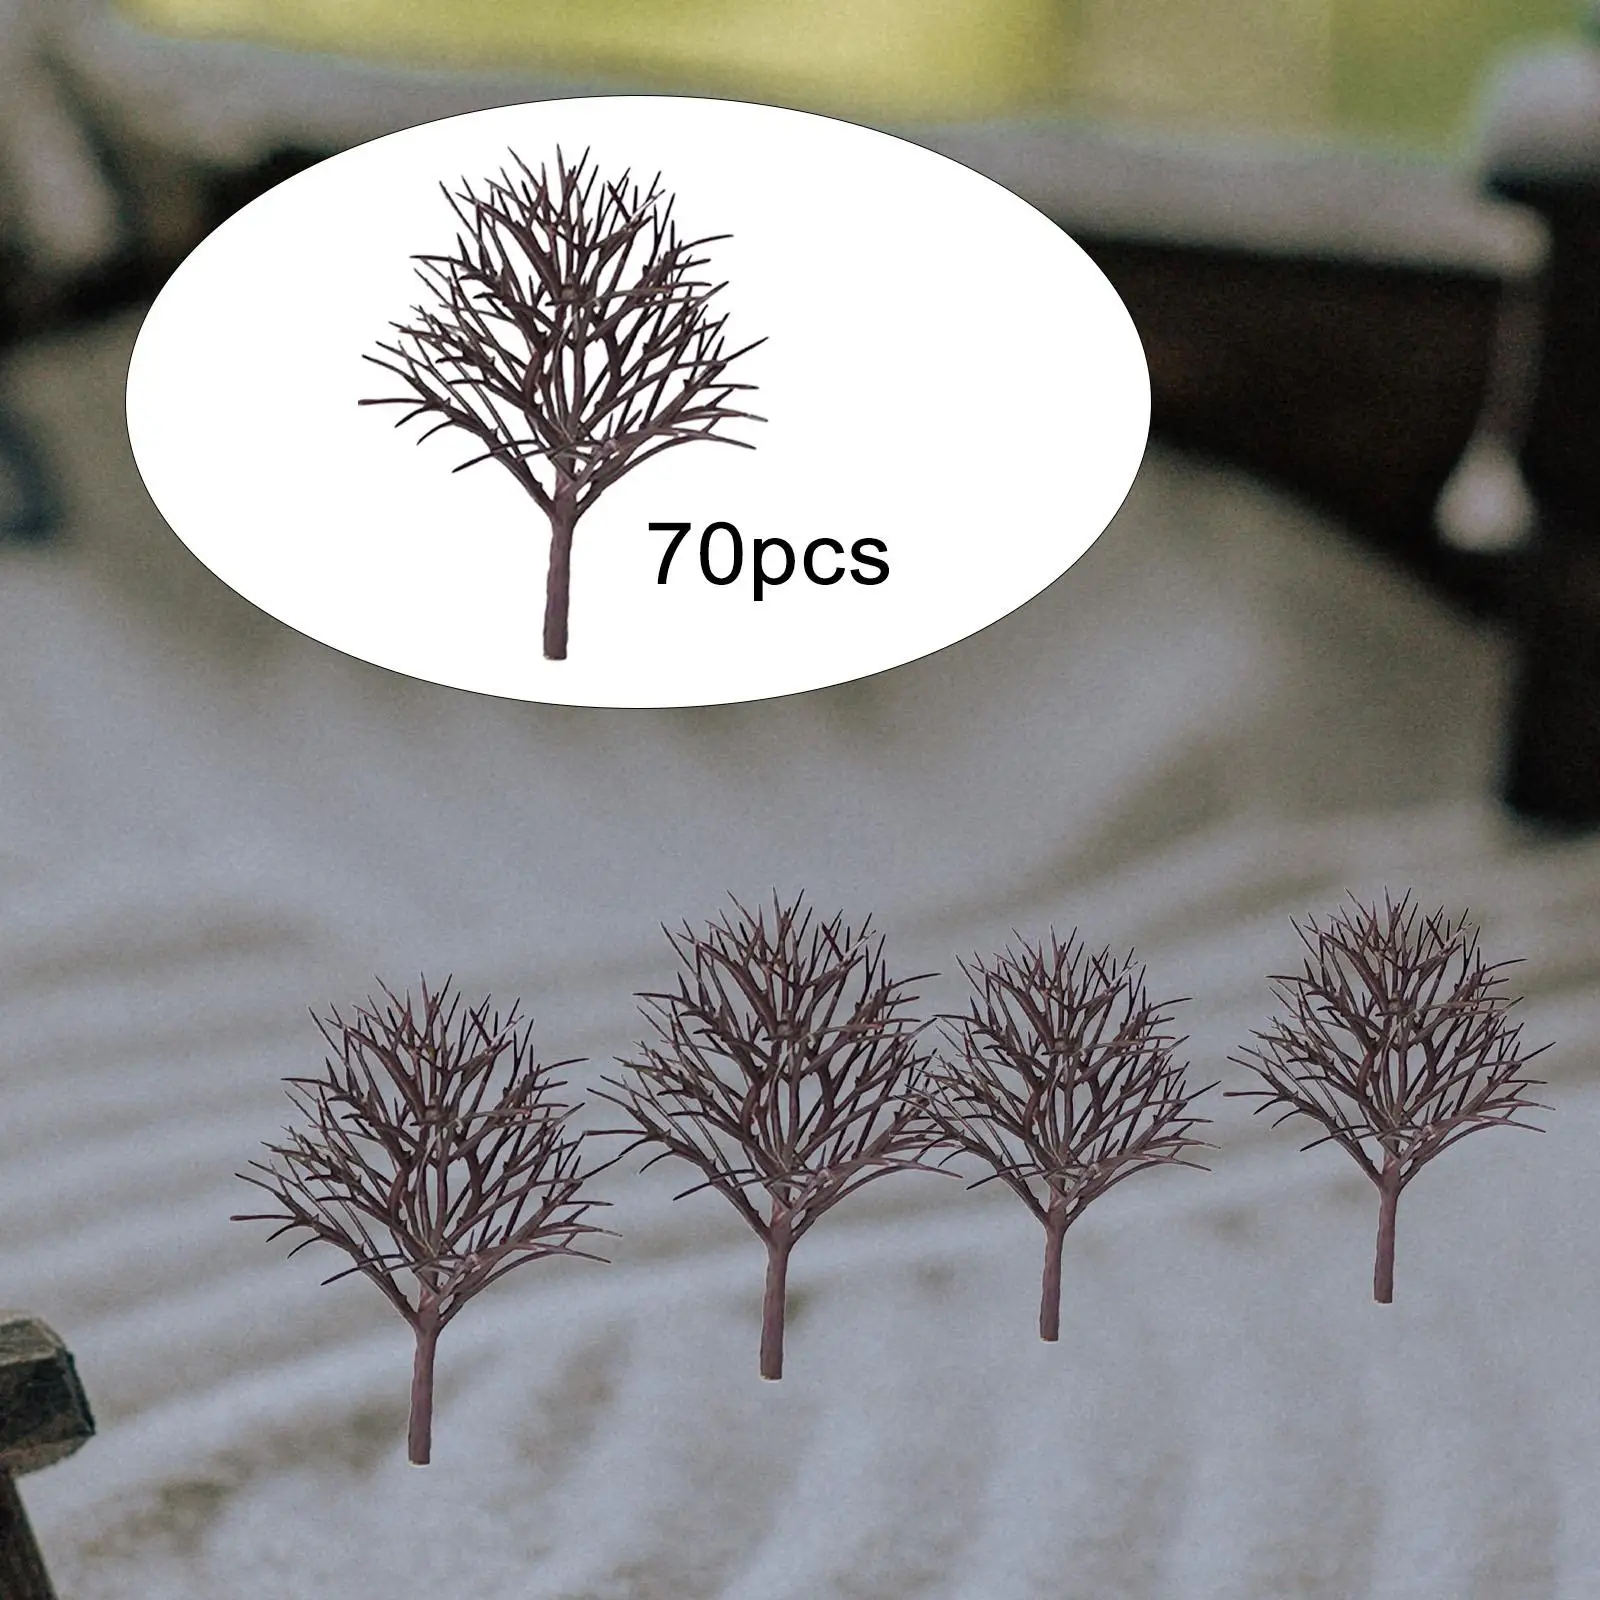 70Pcs Model Trees Peach Tree Train Scenery Architecture Trees for Landscape Scenery